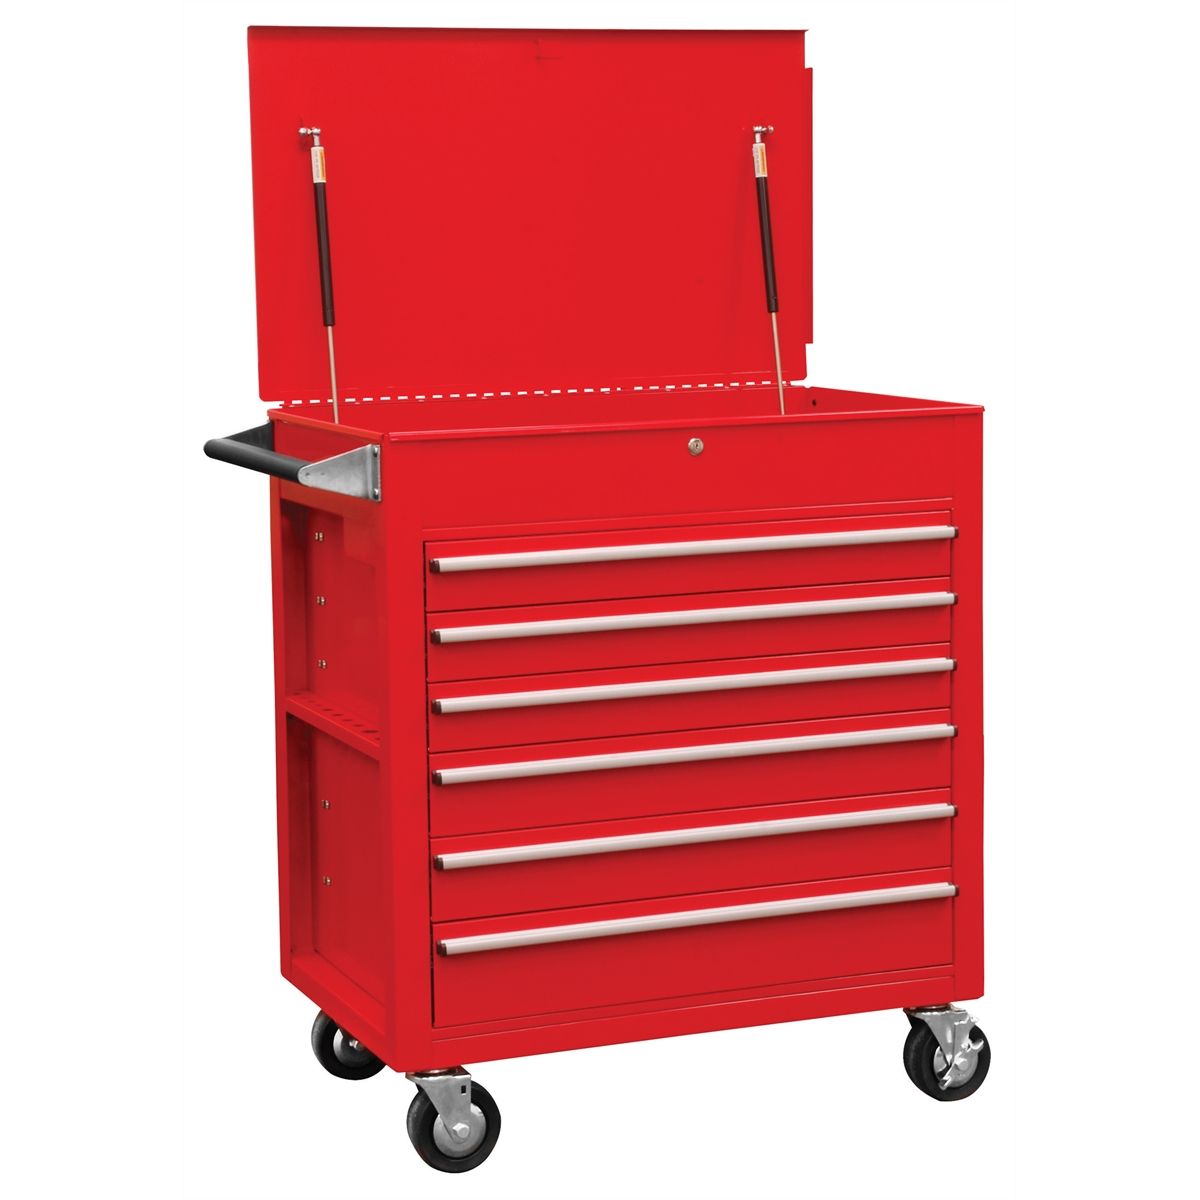 Sunex 8011 Large Locking Screwdriver/Pry Bar Holder for Service Cart-Red